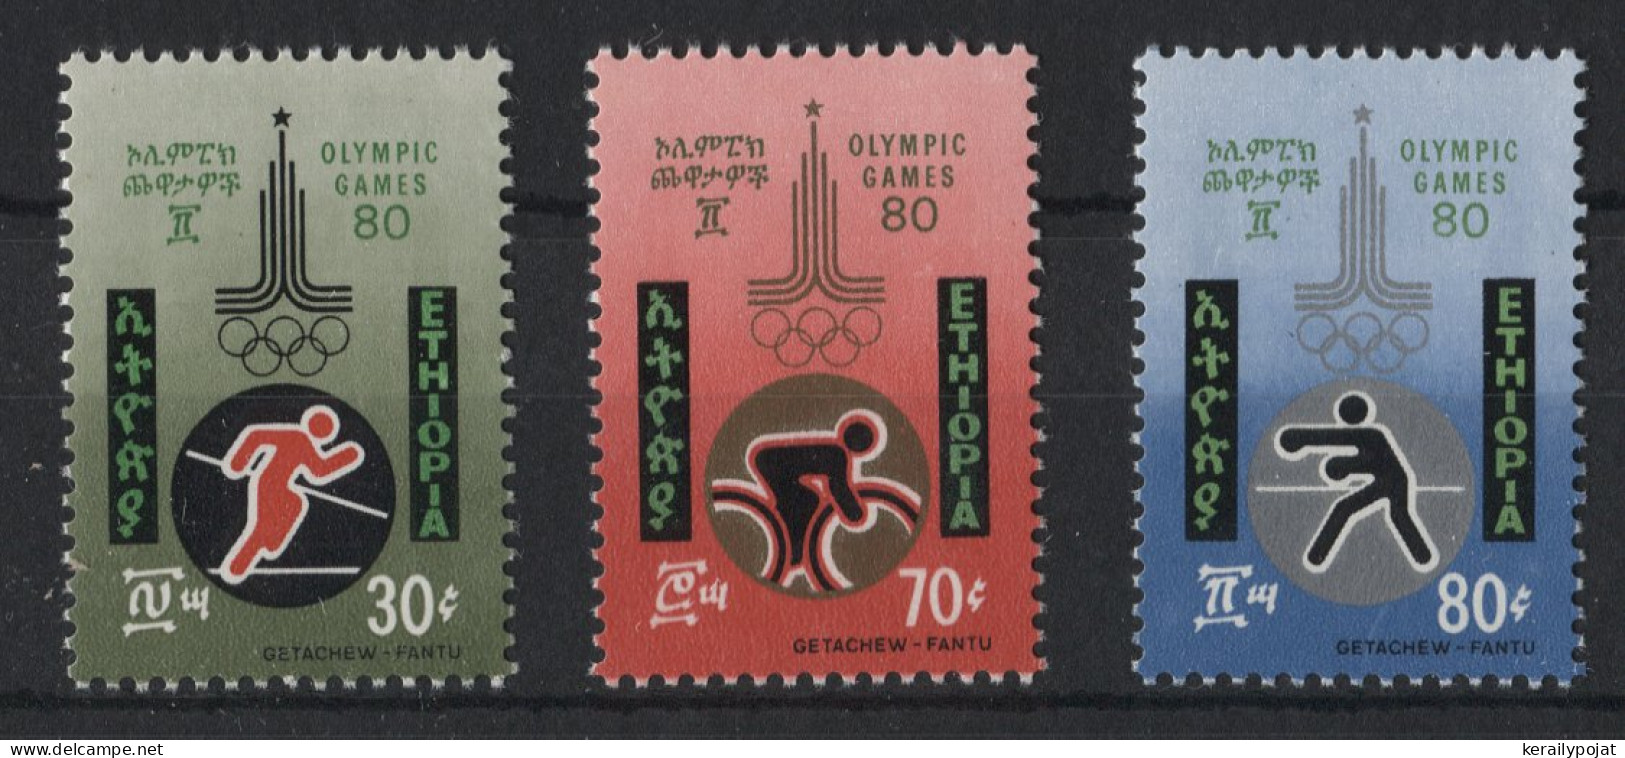 Ethiopia - 1980 Summer Olympics Moscow MNH__(TH-24077) - Ethiopie